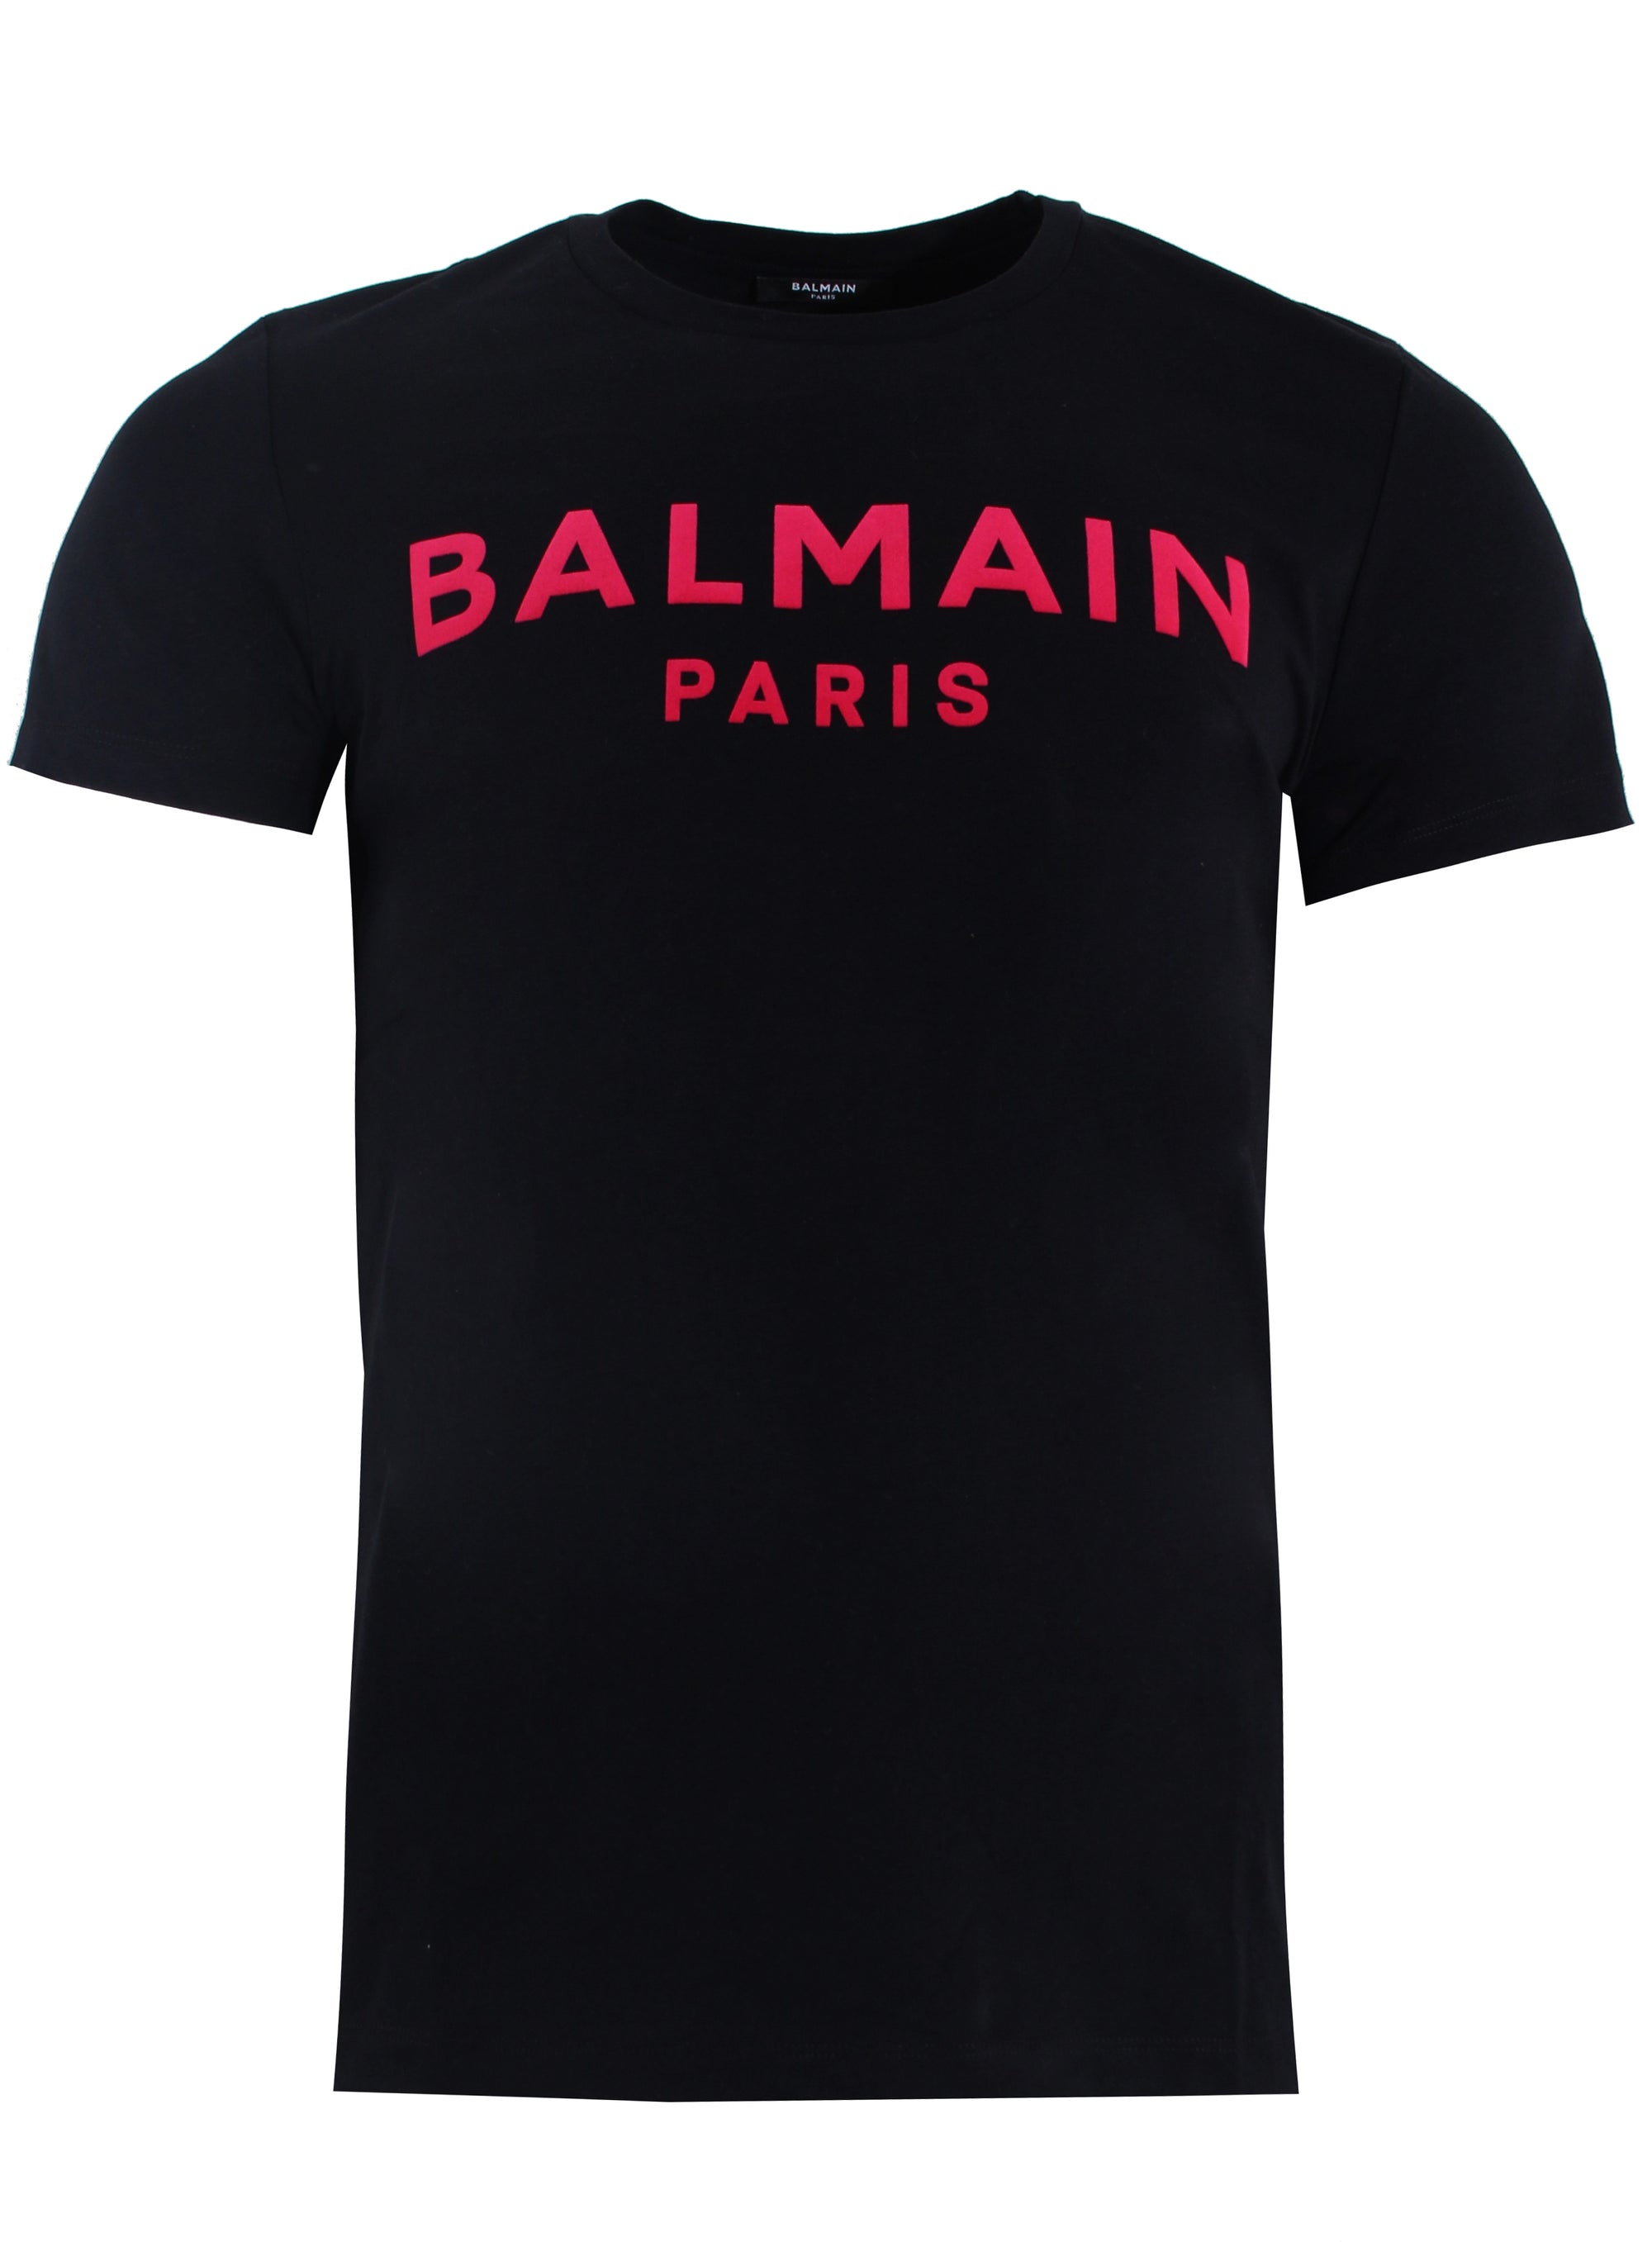 Balmain Flock T-shirt - Black & Fuchsia